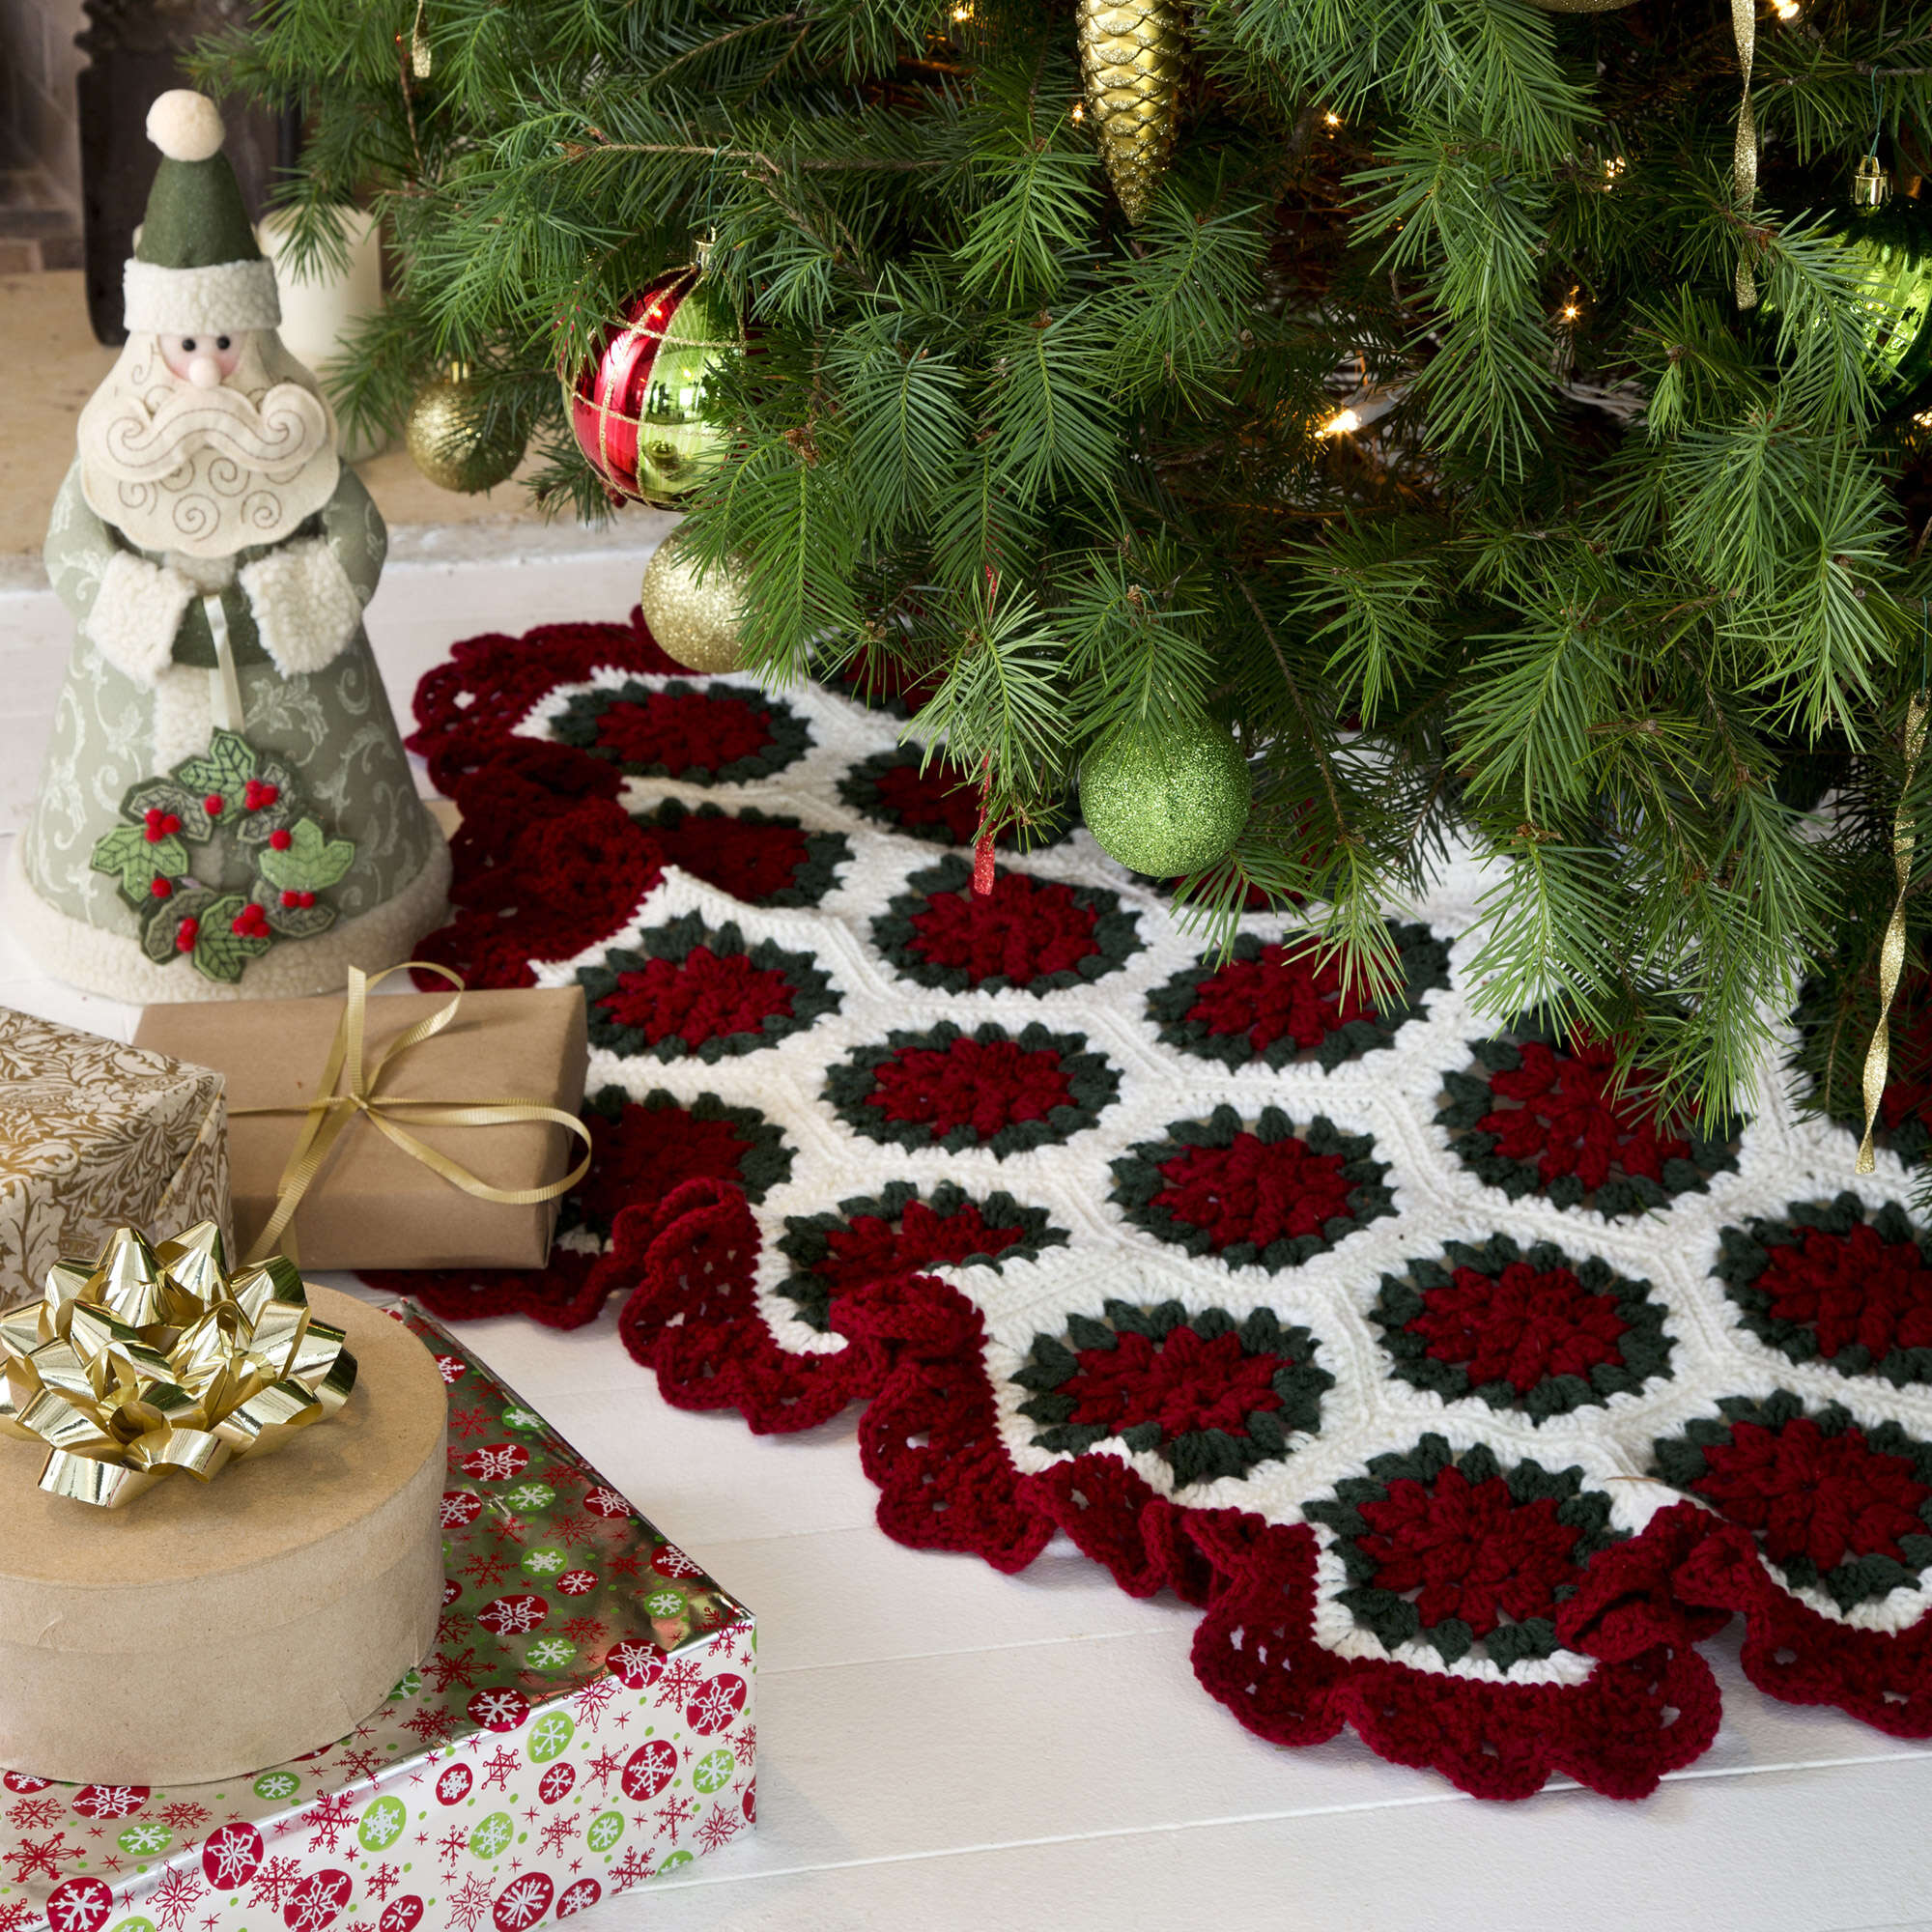 Crochet Tree Skirt Patterns That Sleigh - Crochet 365 Knit Too